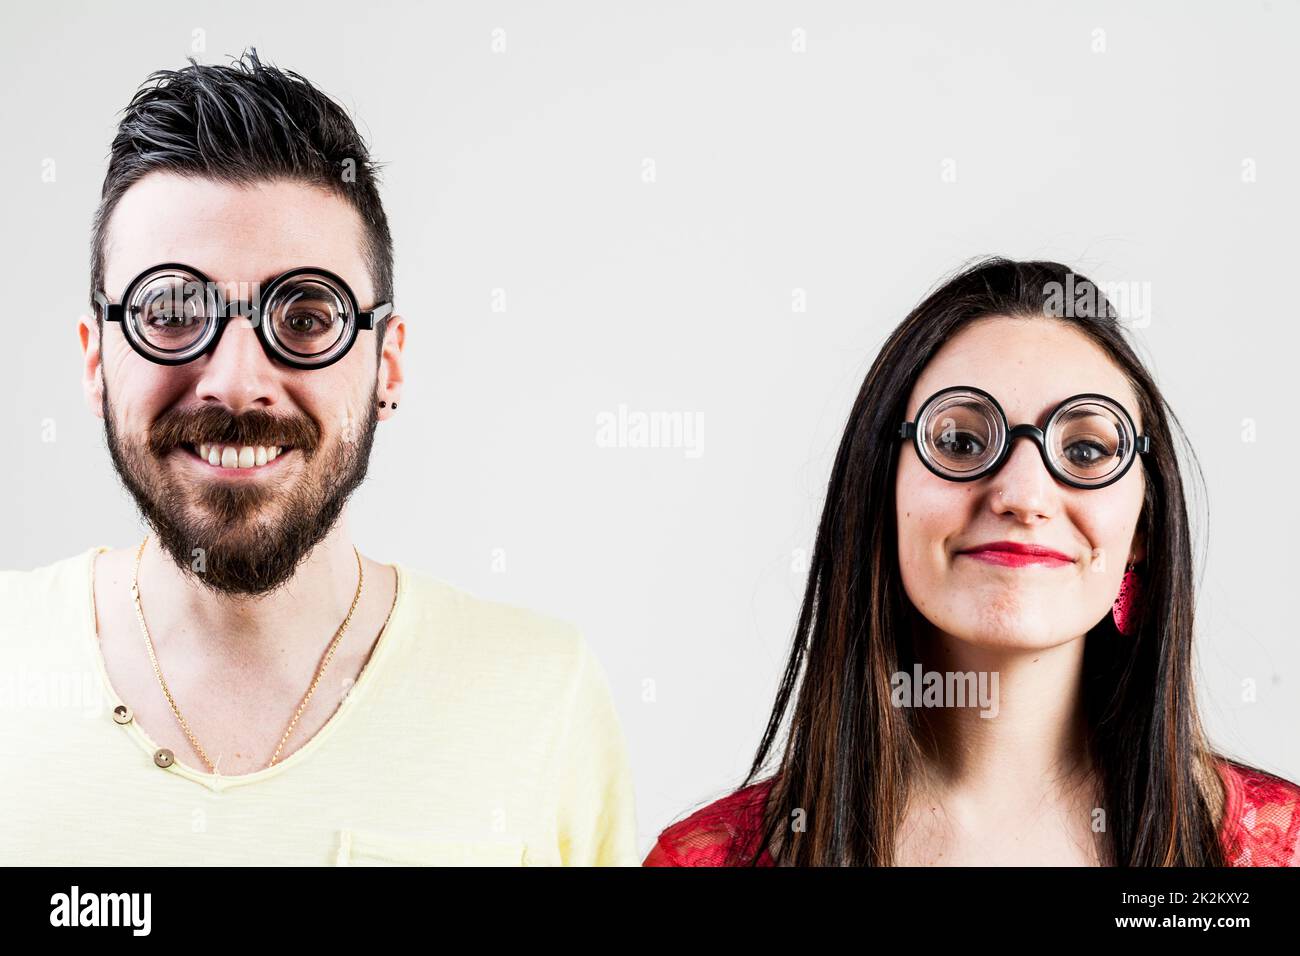 pareja de nerd hecha por un hombre nerd y una mujer nerd Foto de stock